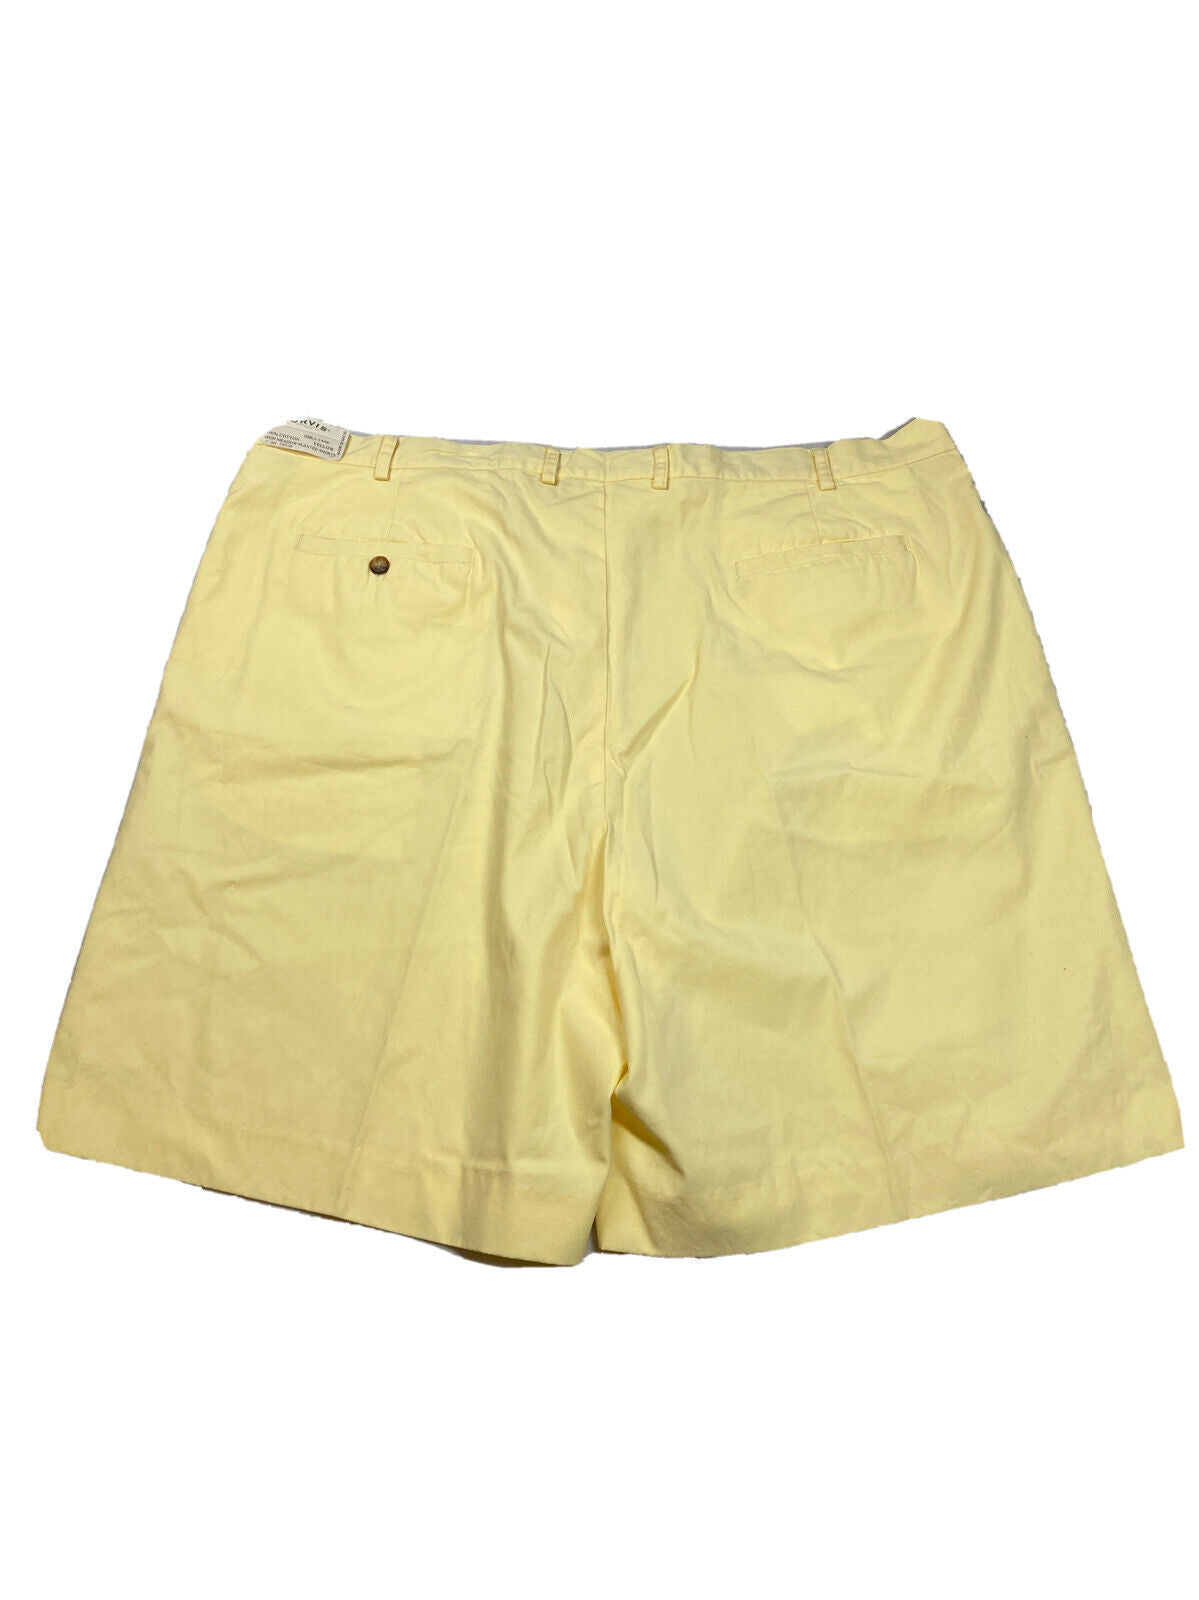 NEW Orvis Men's Yellow 100% Cotton Elephant Poplin Plated Shorts - 46